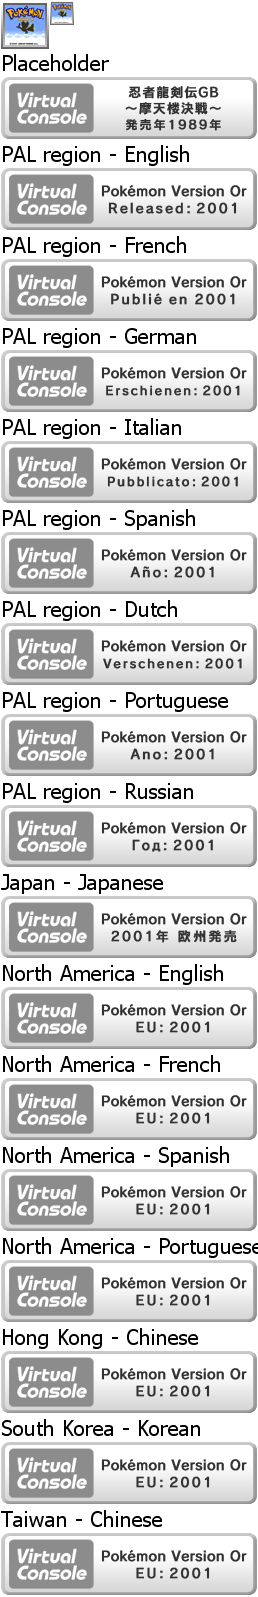 Virtual Console - Pokémon Version Or